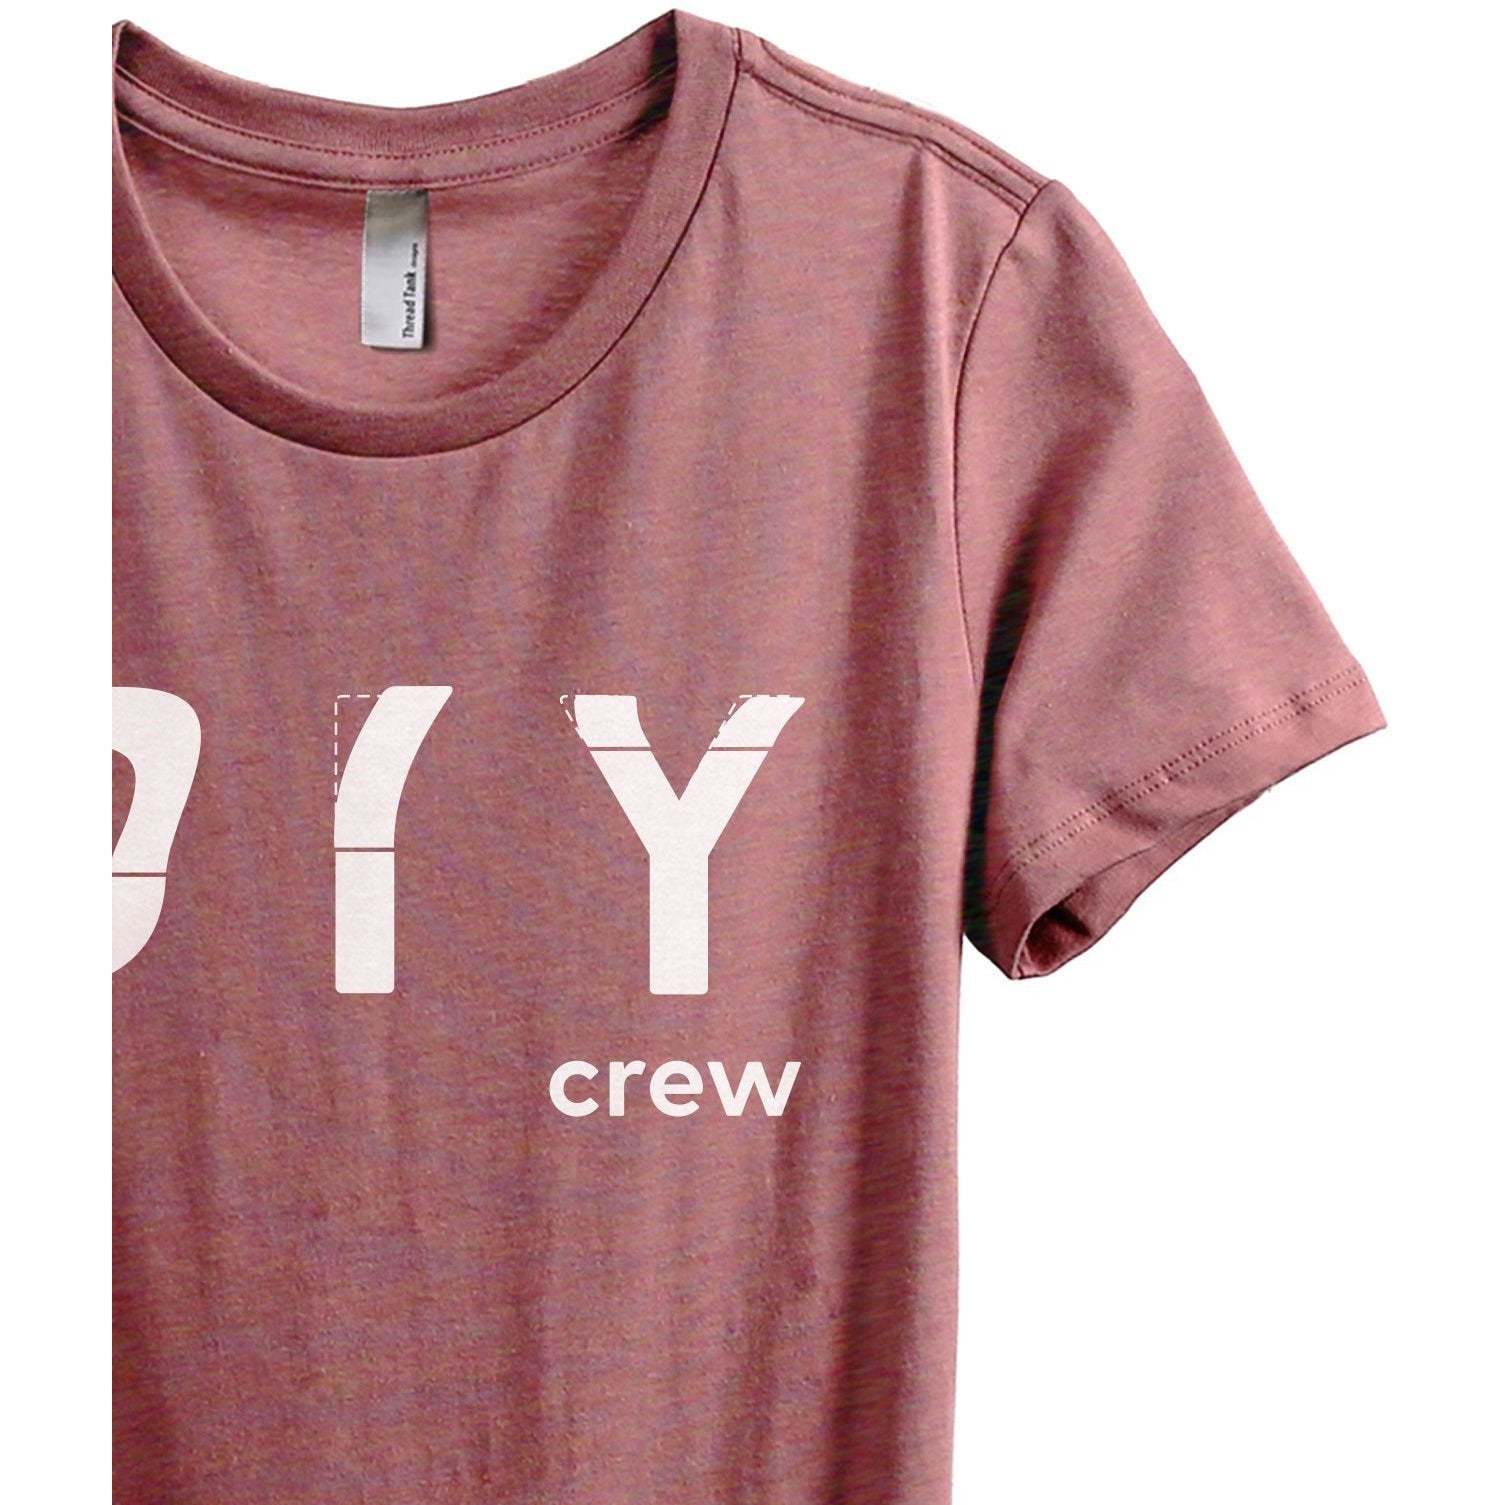 DIY Crew Women's Relaxed Crewneck T-Shirt Top Tee Heather Rouge Zoom Details
